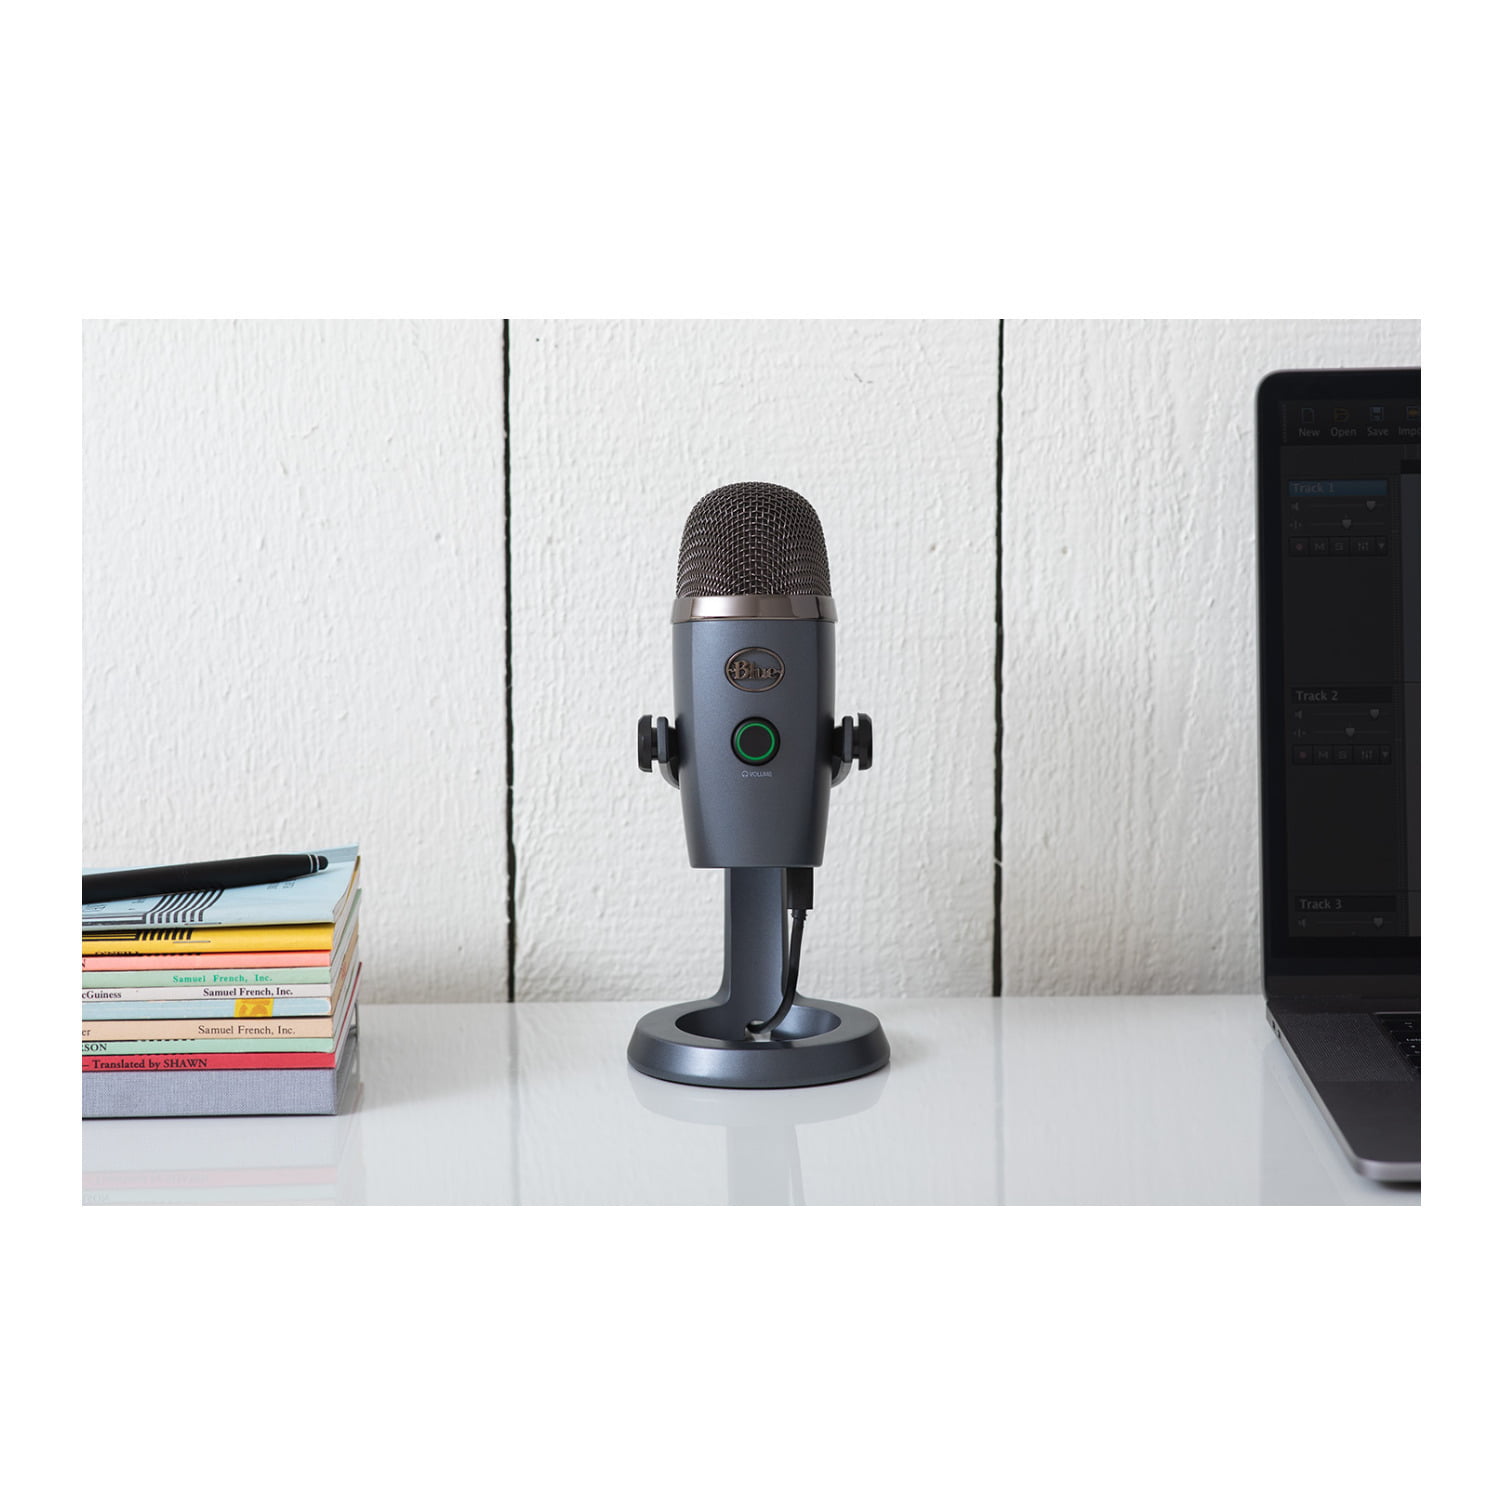 BLUE Yeti Nano USB Microphone, Shadow Gray. #R0893